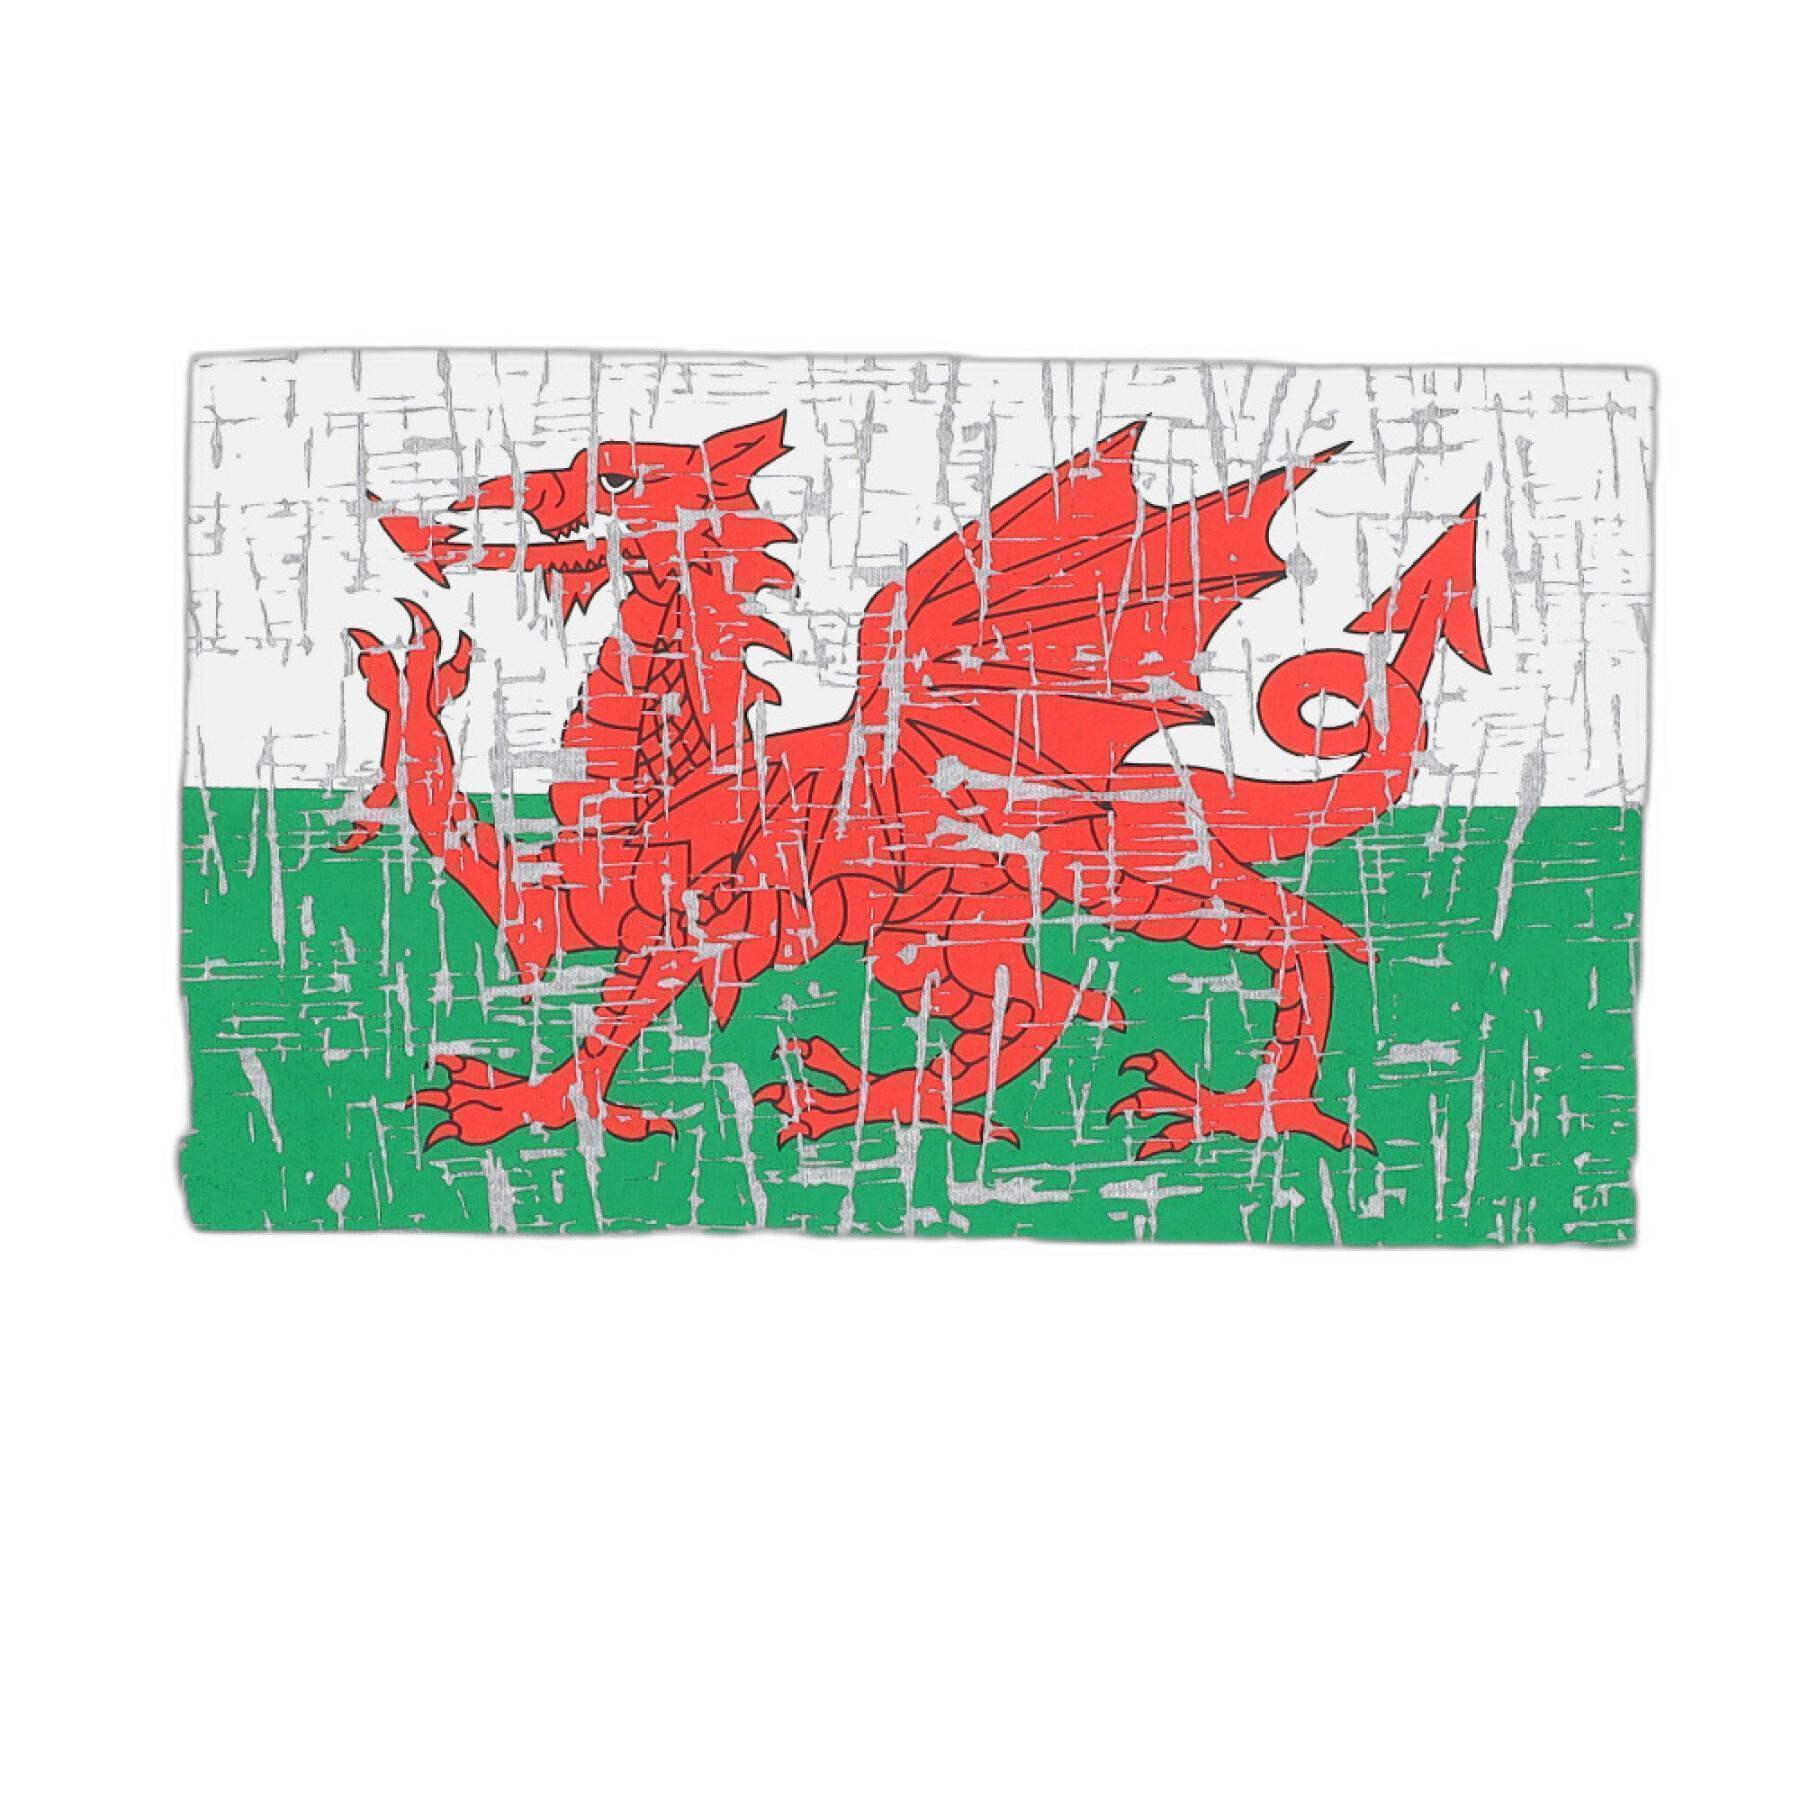 Koszulka dziecięca Pays de Galles Rugby XV 2020/21